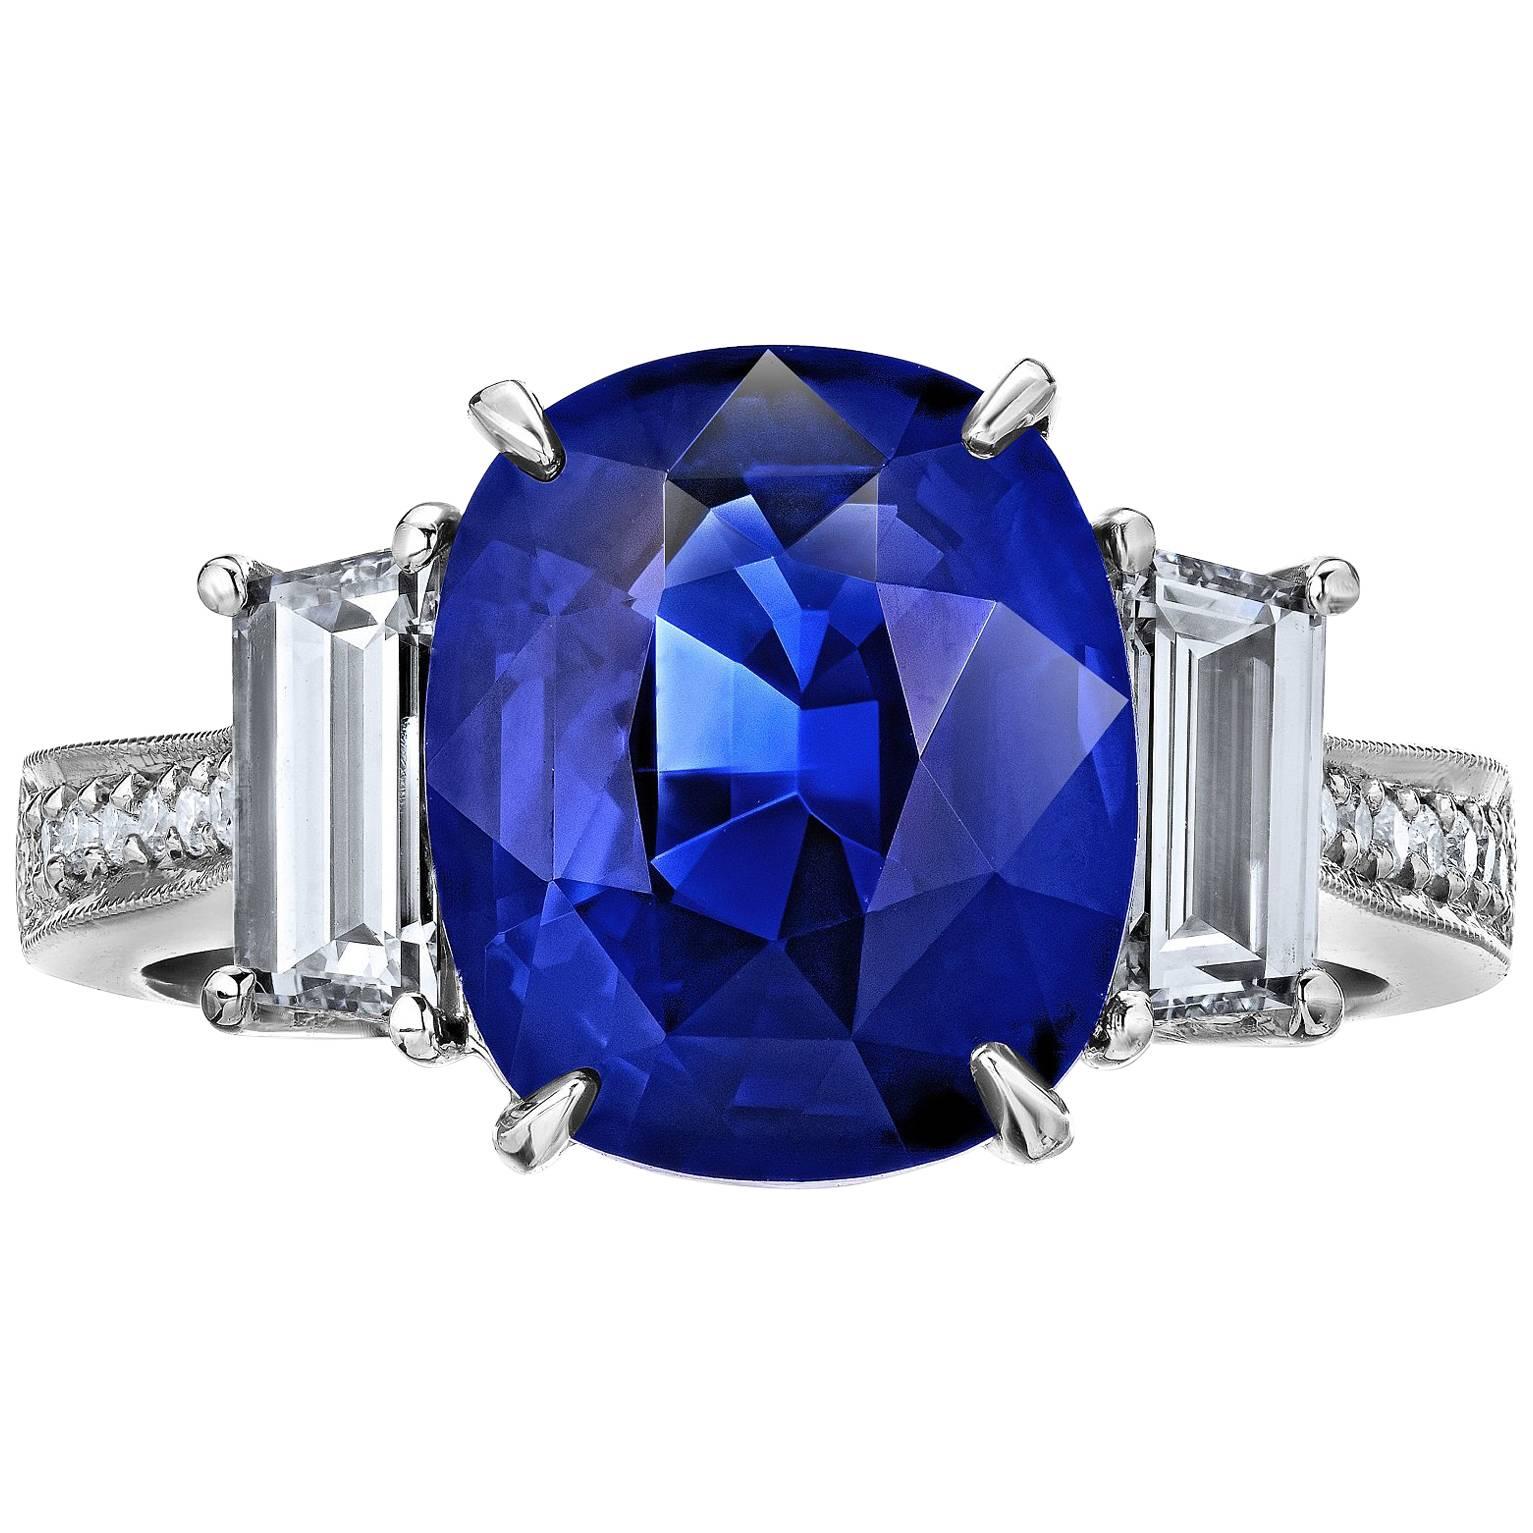 4.50 Carat Royal Blue Sapphire Diamond Ring